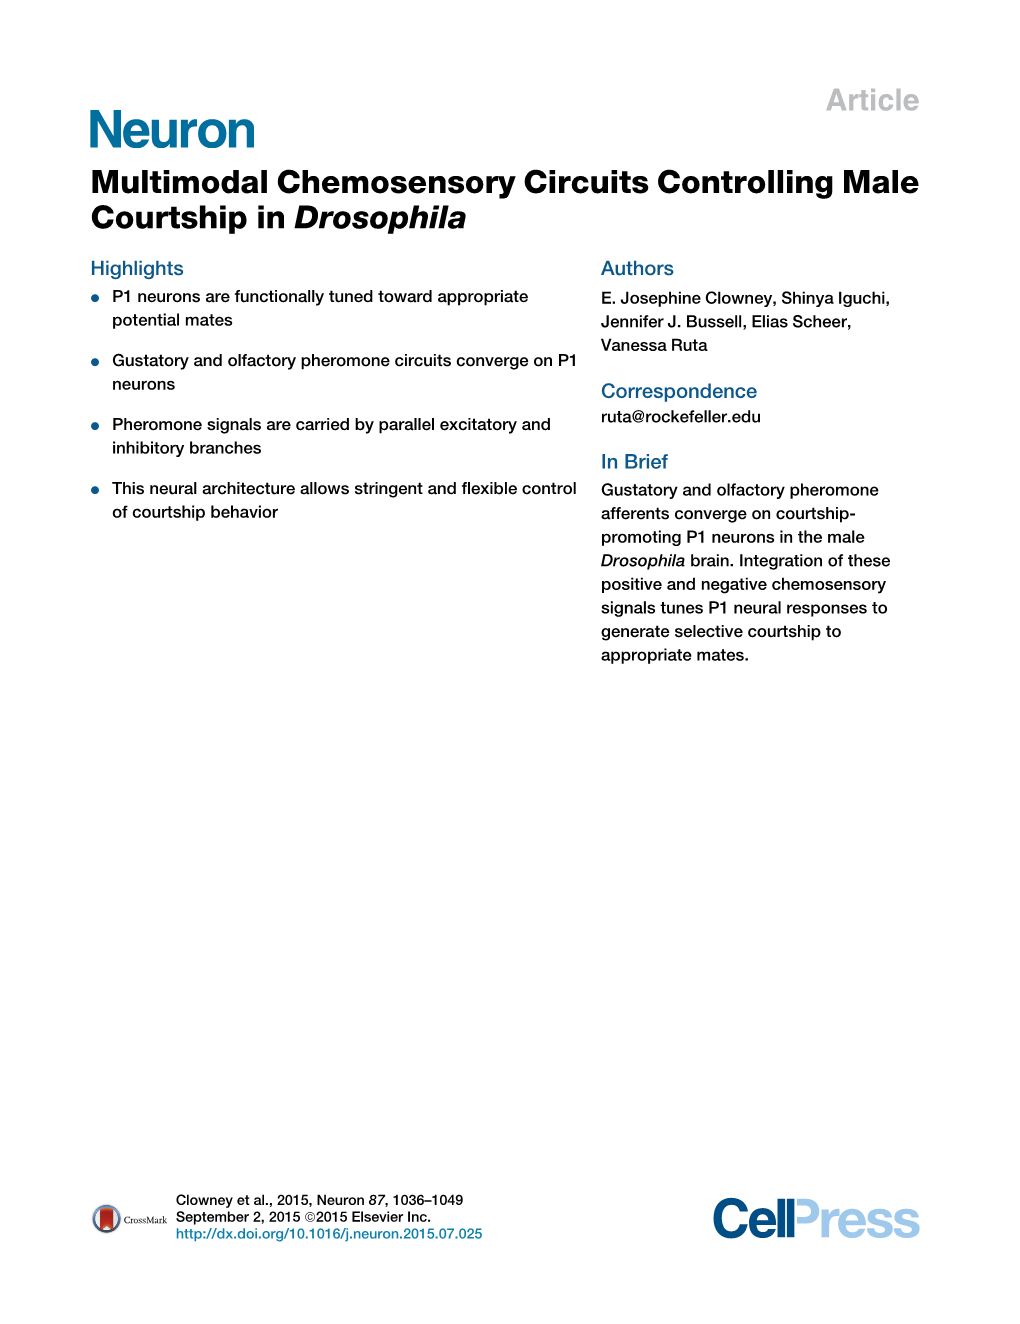 Multimodal Chemosensory Circuits Controlling Male Courtship in Drosophila